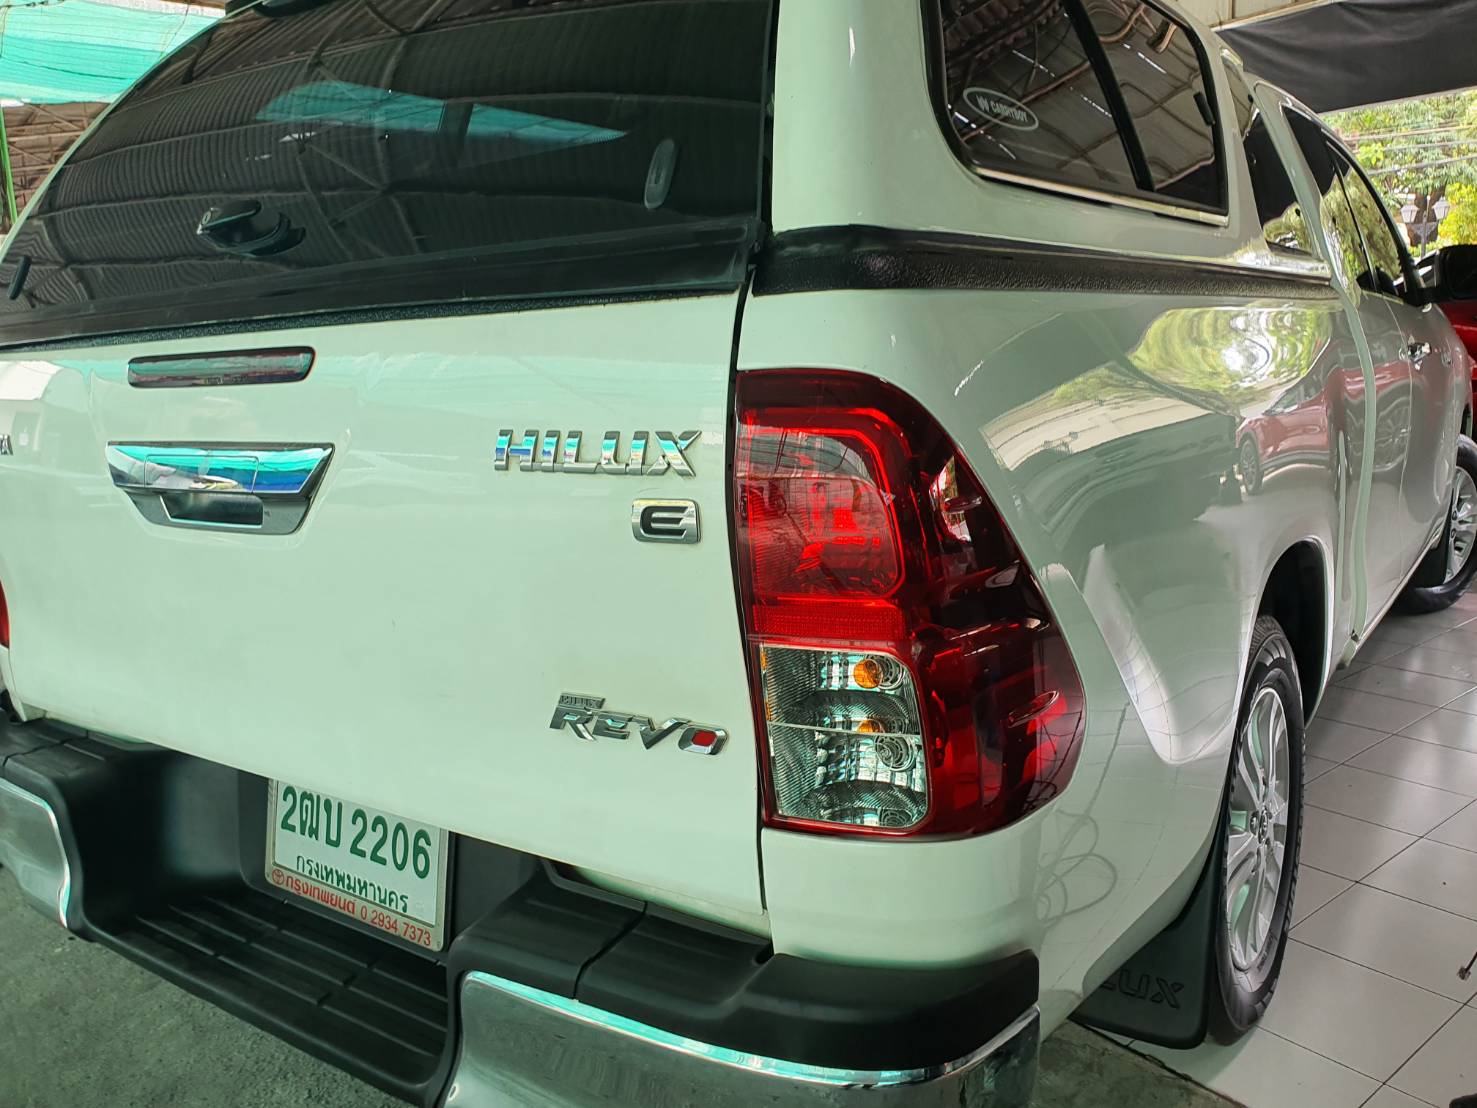 Toyota Hilux Revo 2.4E Smart cab สีขาว ปี 2018พร้อมหลังคา